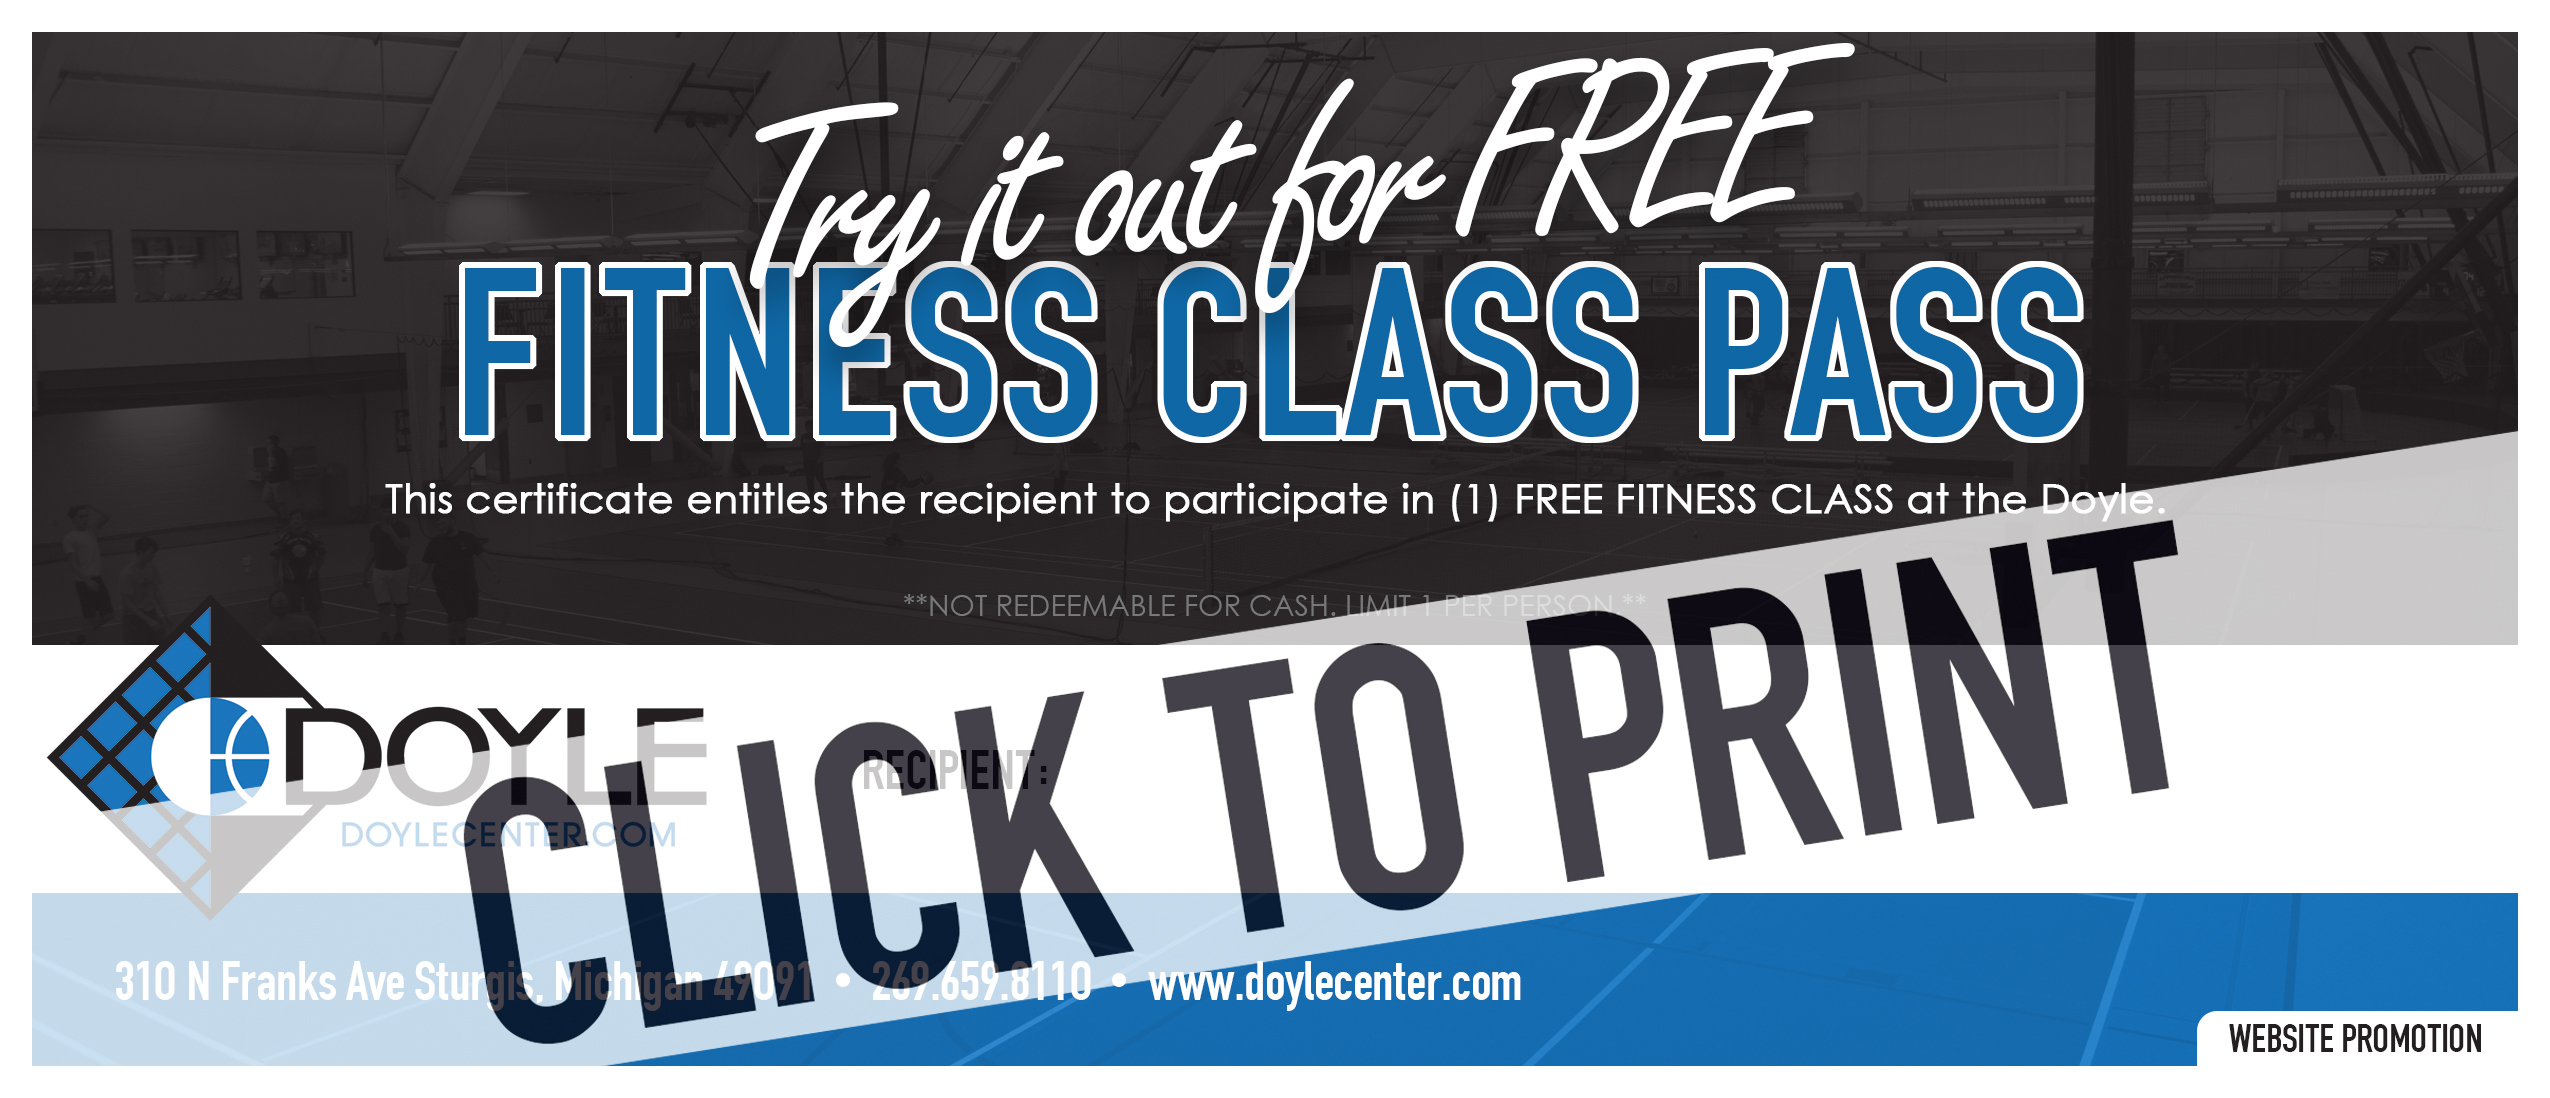 Free fitness class passes